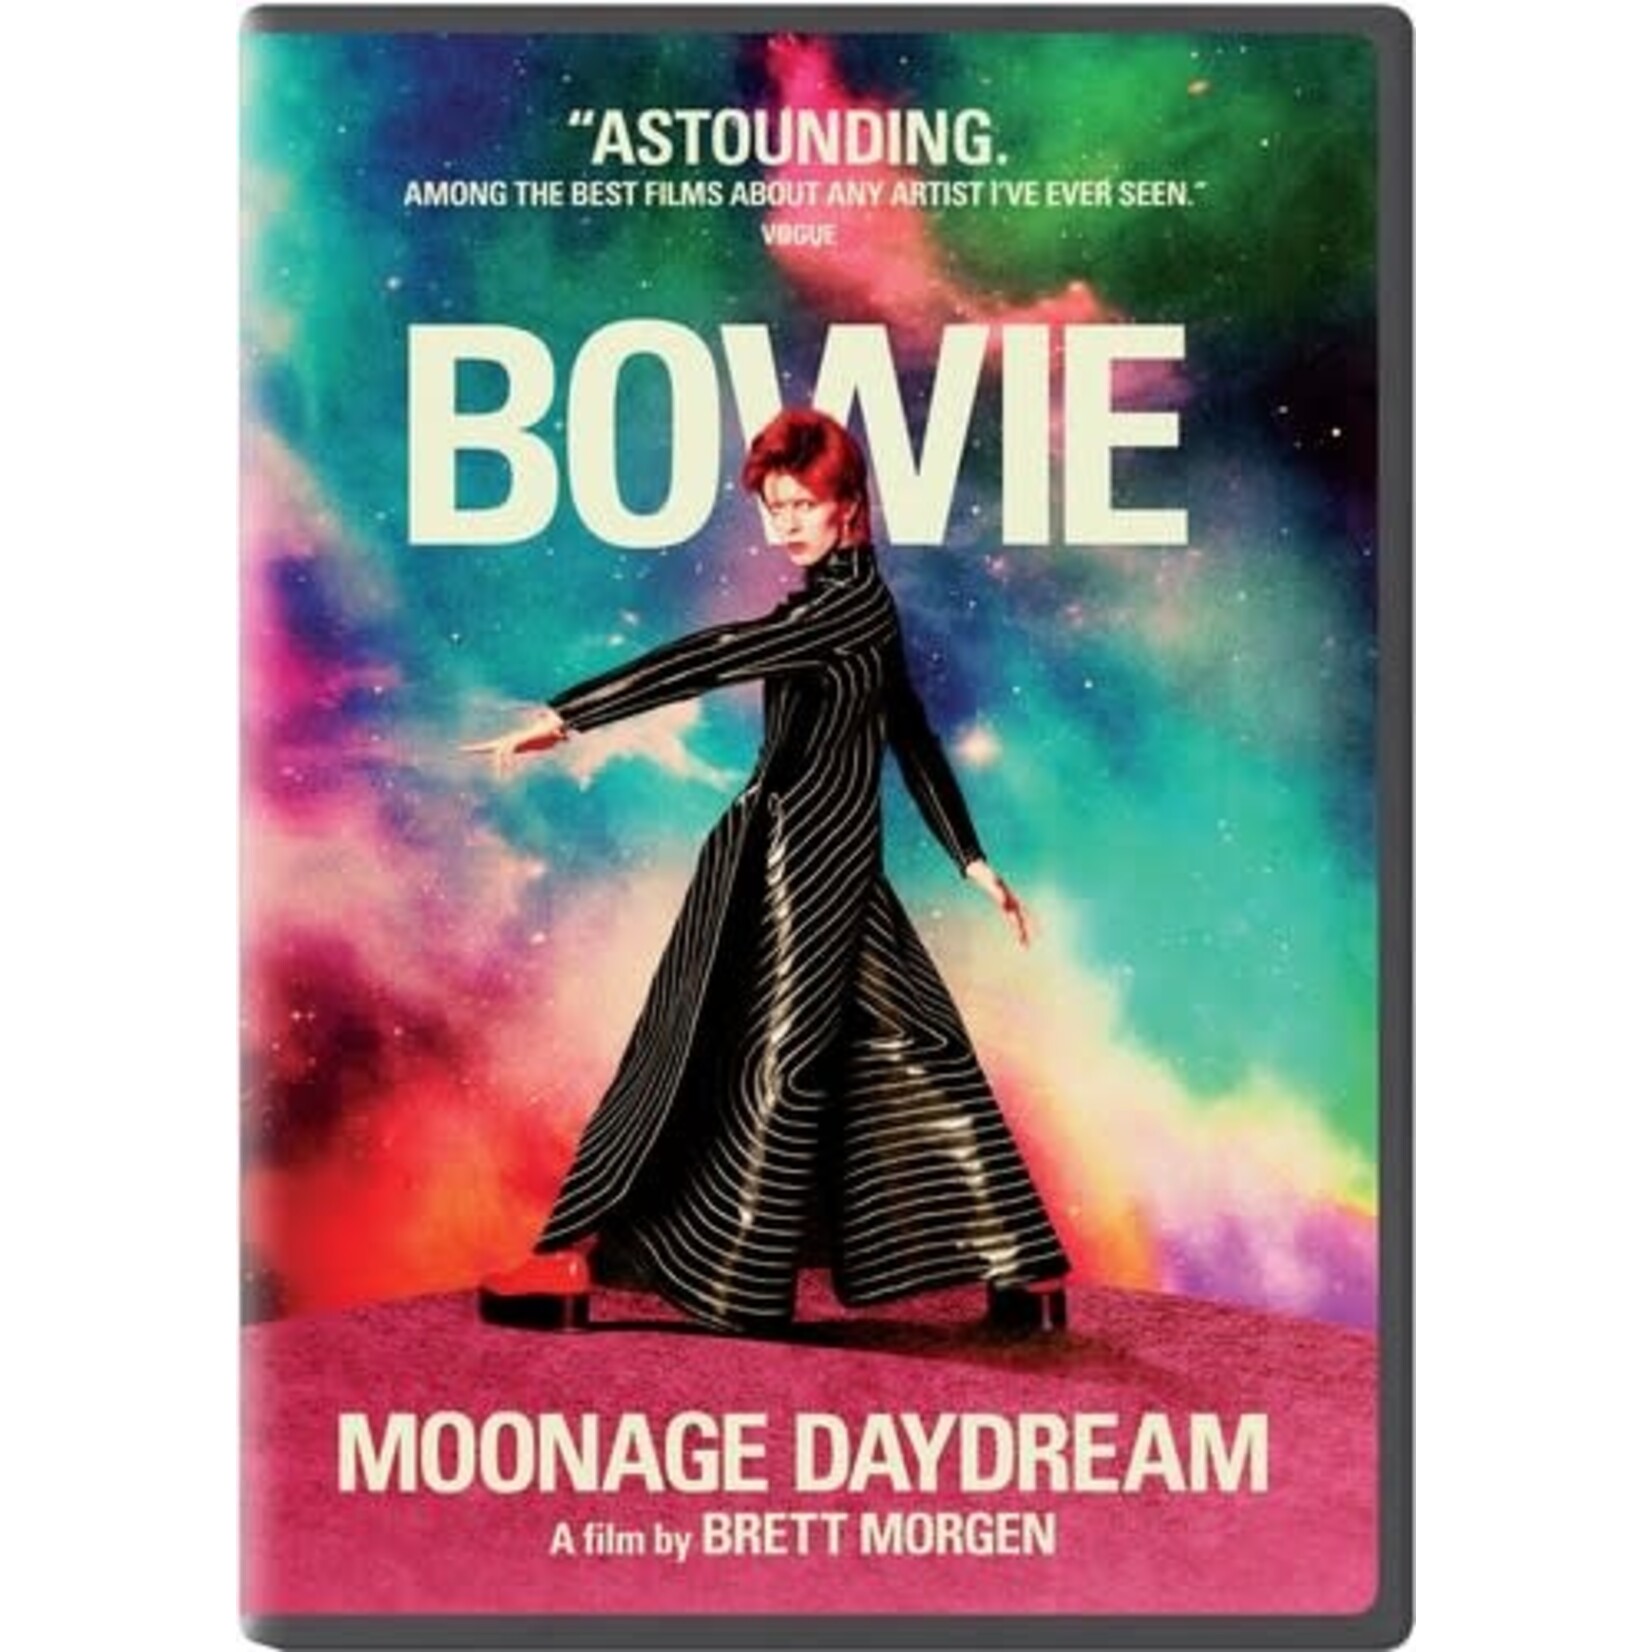 David Bowie - Moonage Daydream - Blu-Ray (NEW)